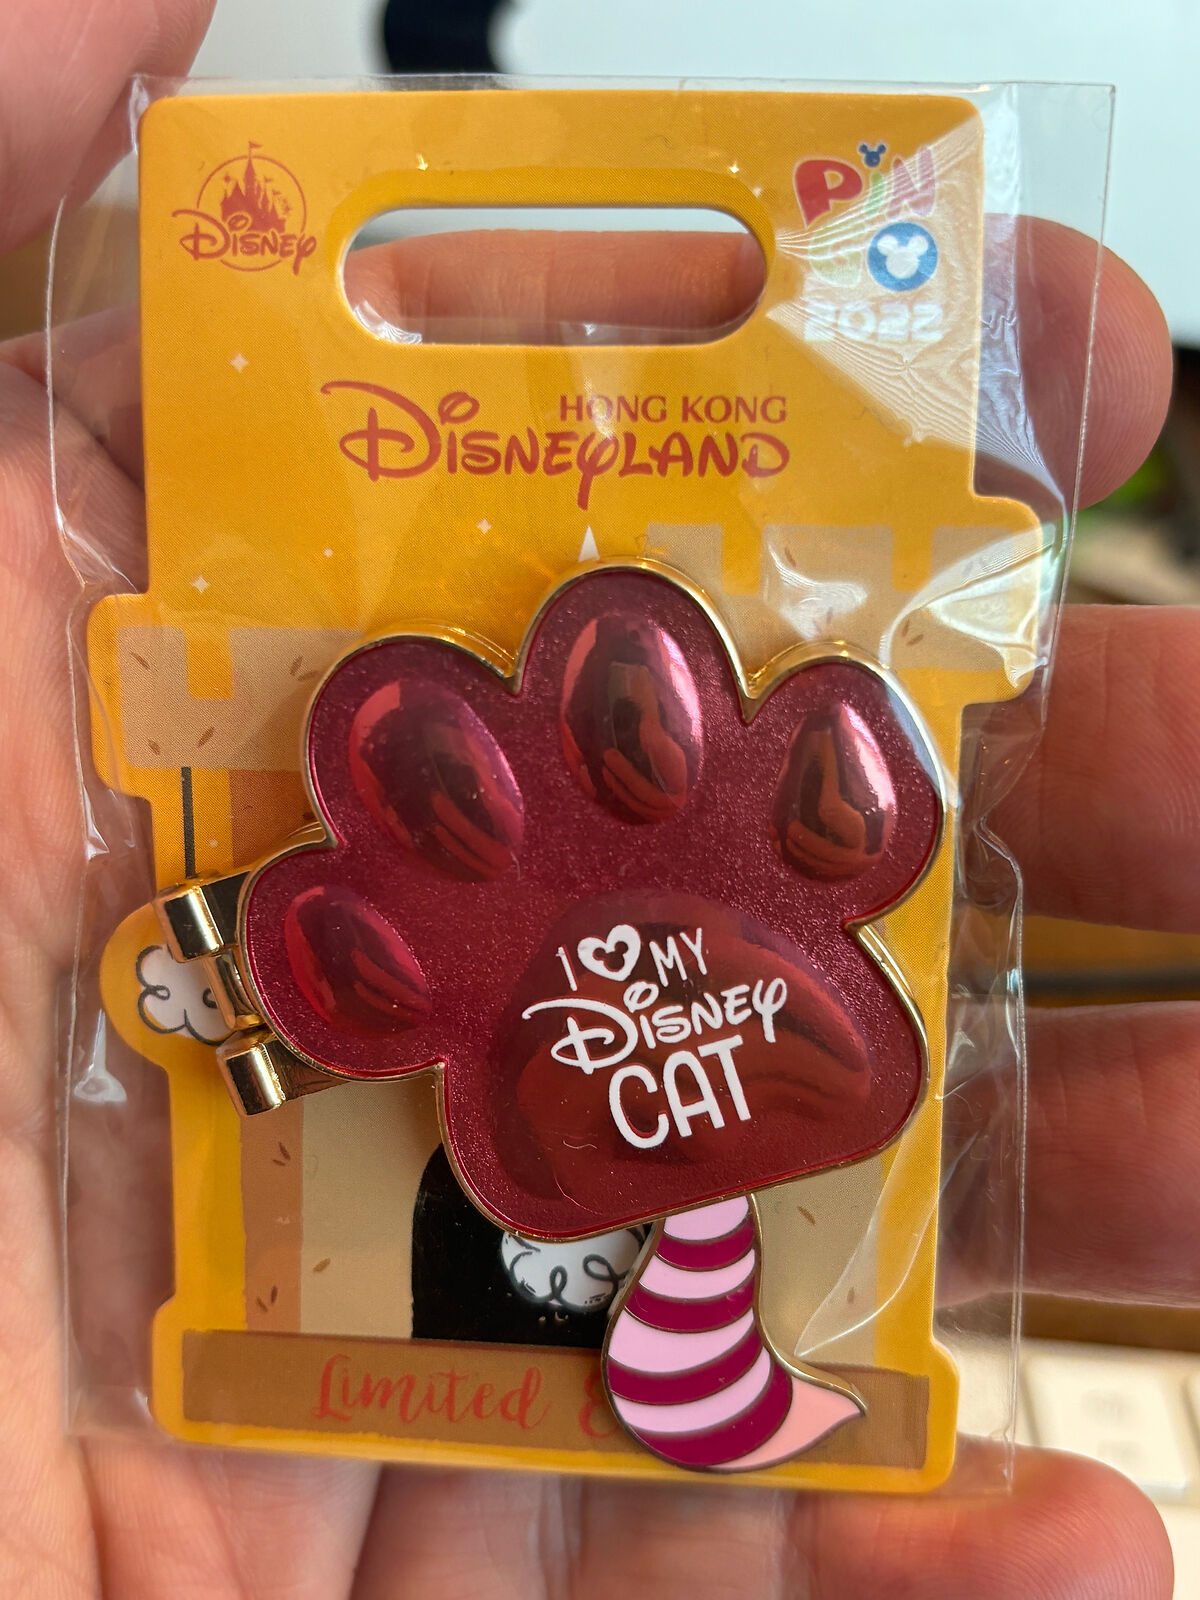 Hong Kong Disneyland HKDL I Love My Disney Cat Pin - Cheshire Cat LE500